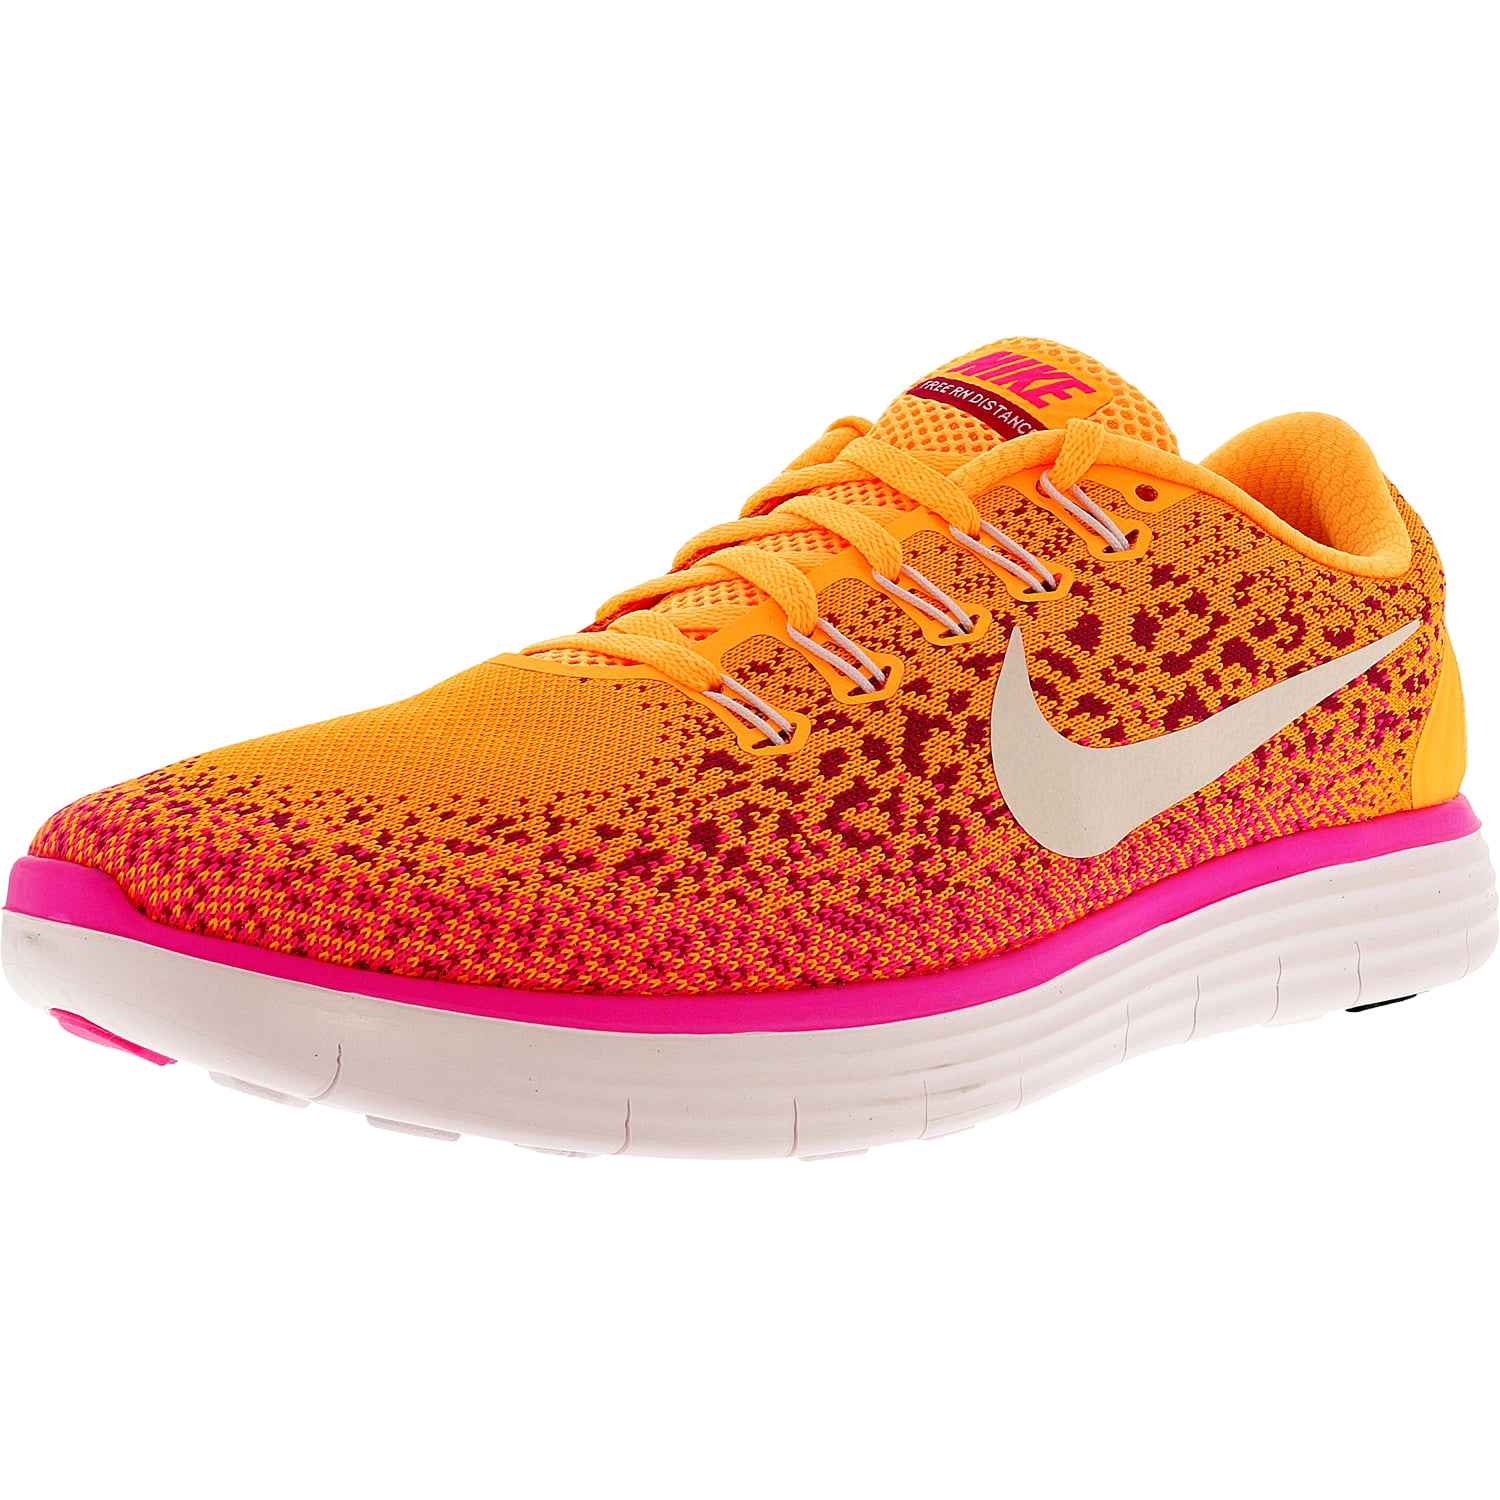 Nike Women's Free Distance Atomic Orange/White-Fire Ankle-High Running Shoe - 10.5M - Walmart.com